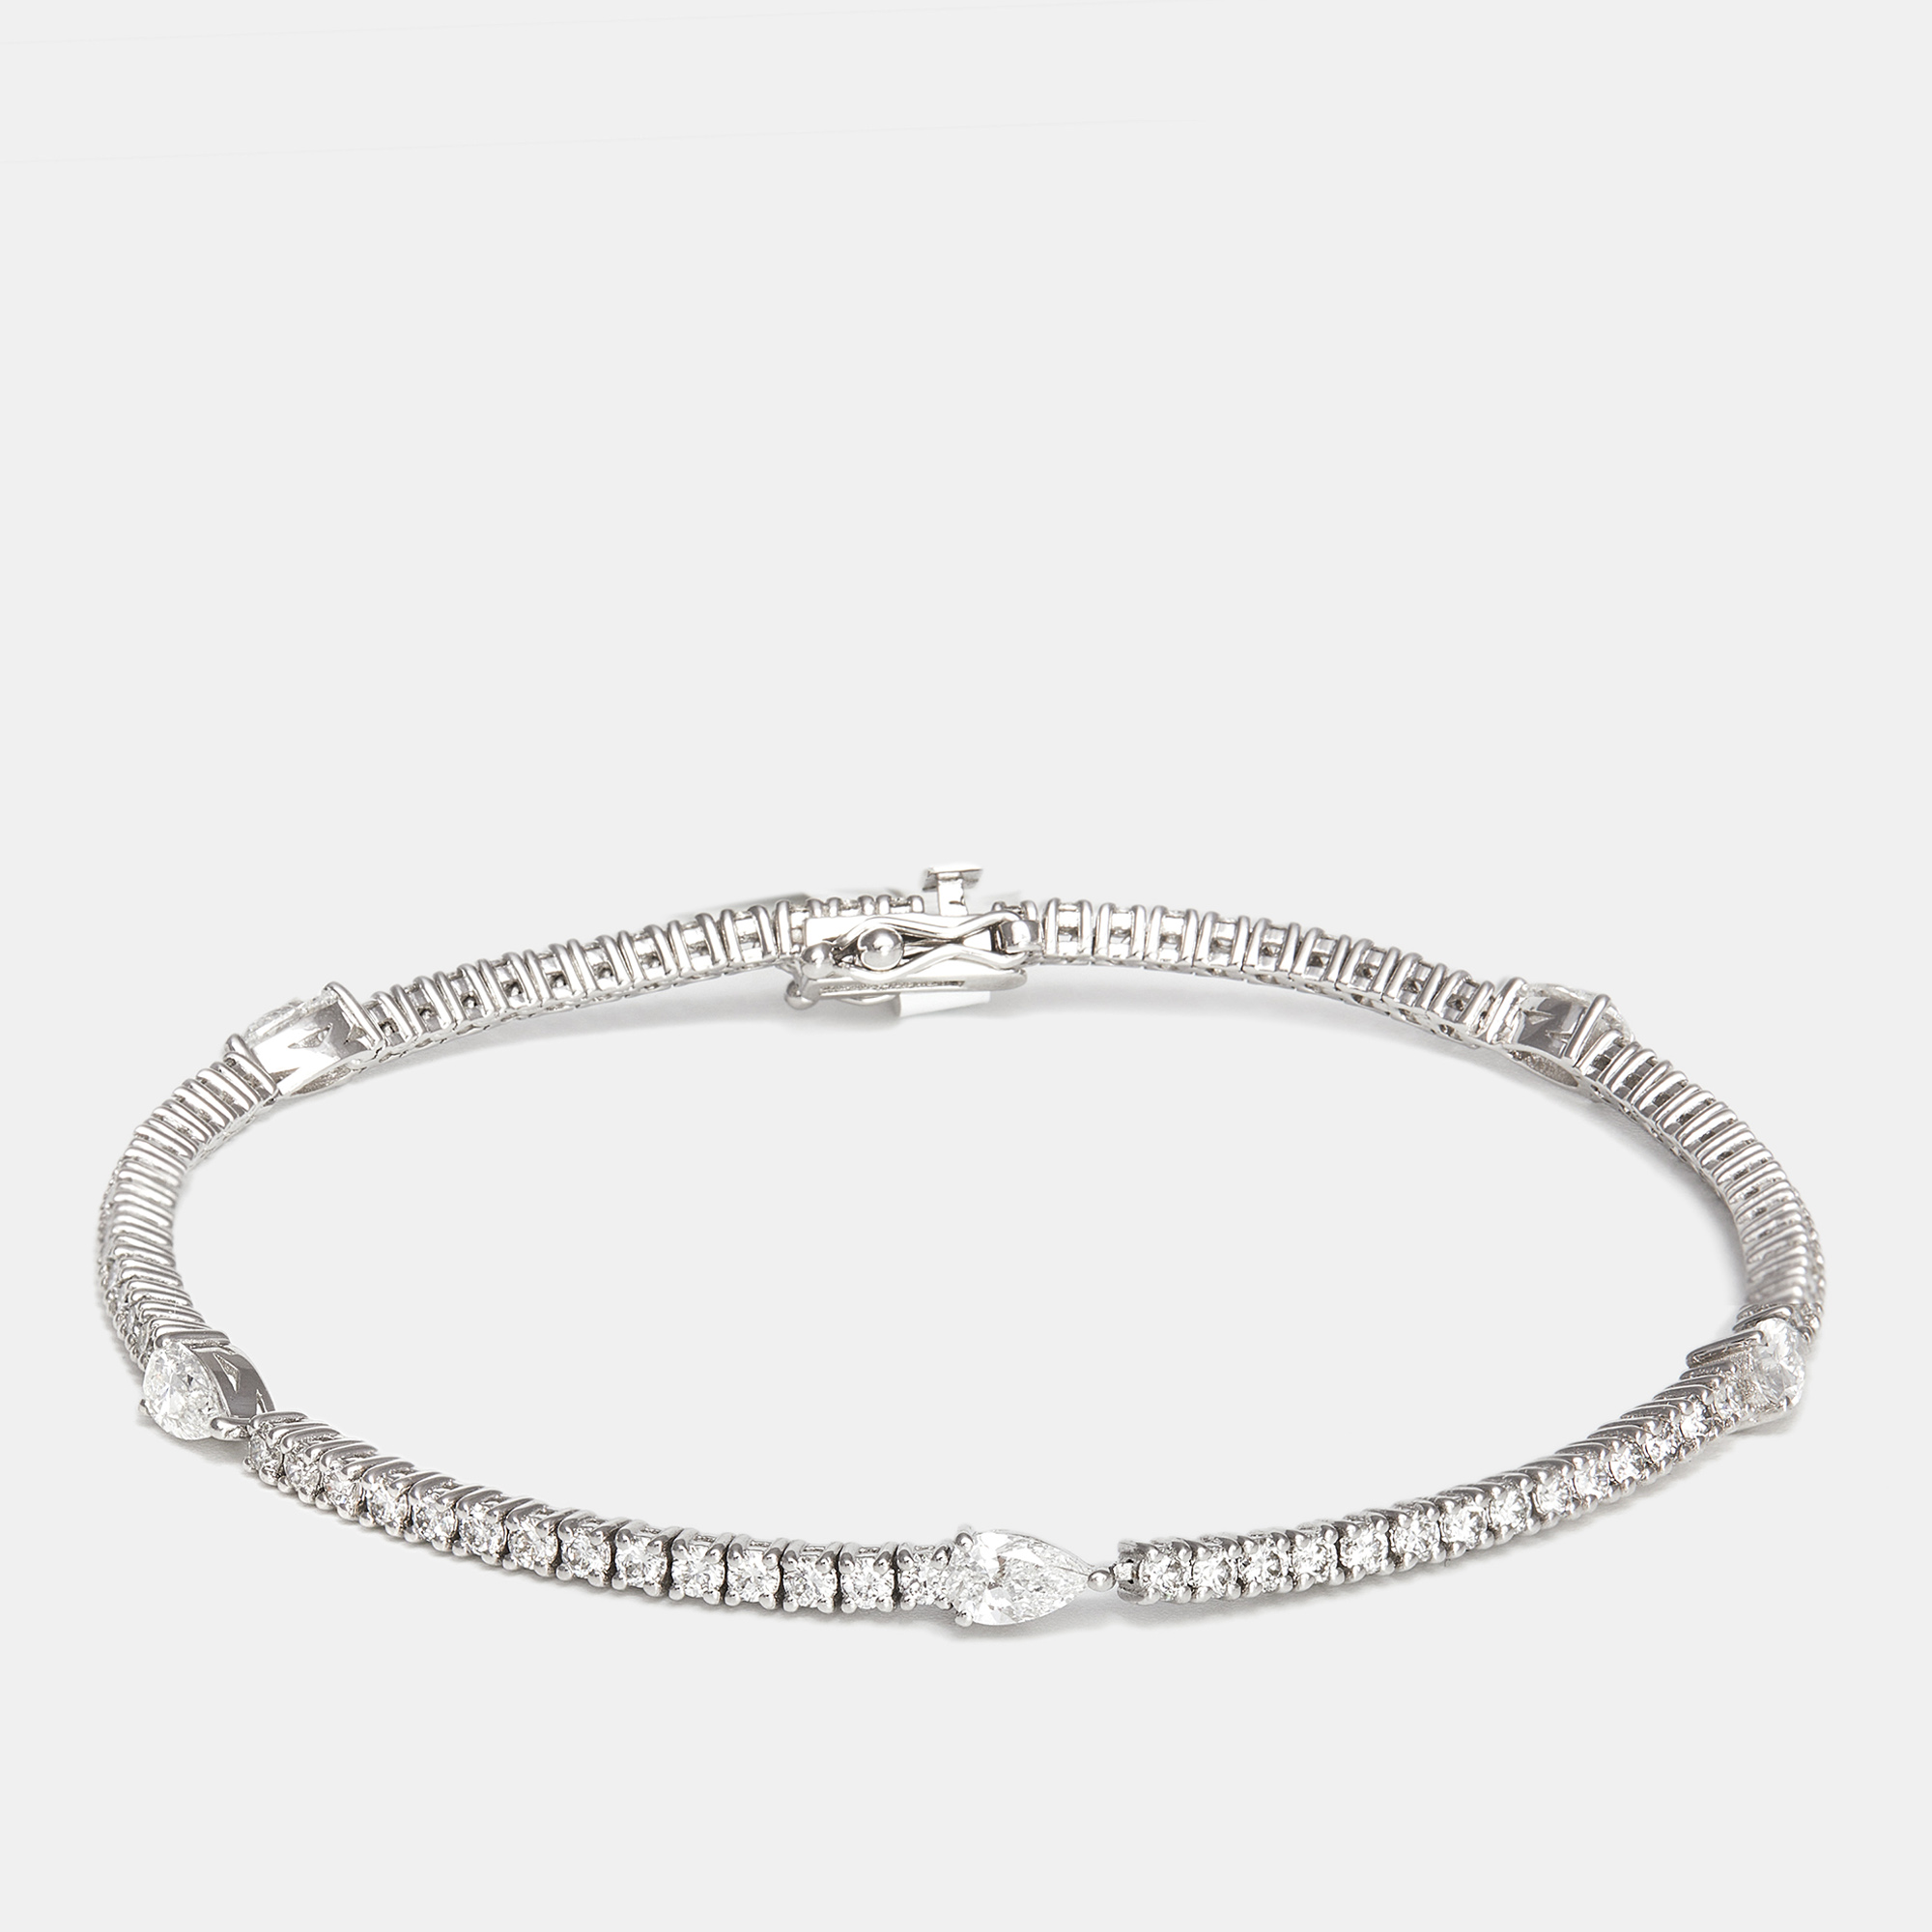 The diamond edit 18k white gold pear shape and round diamonds 2.62 cts elegant tennis bracelet